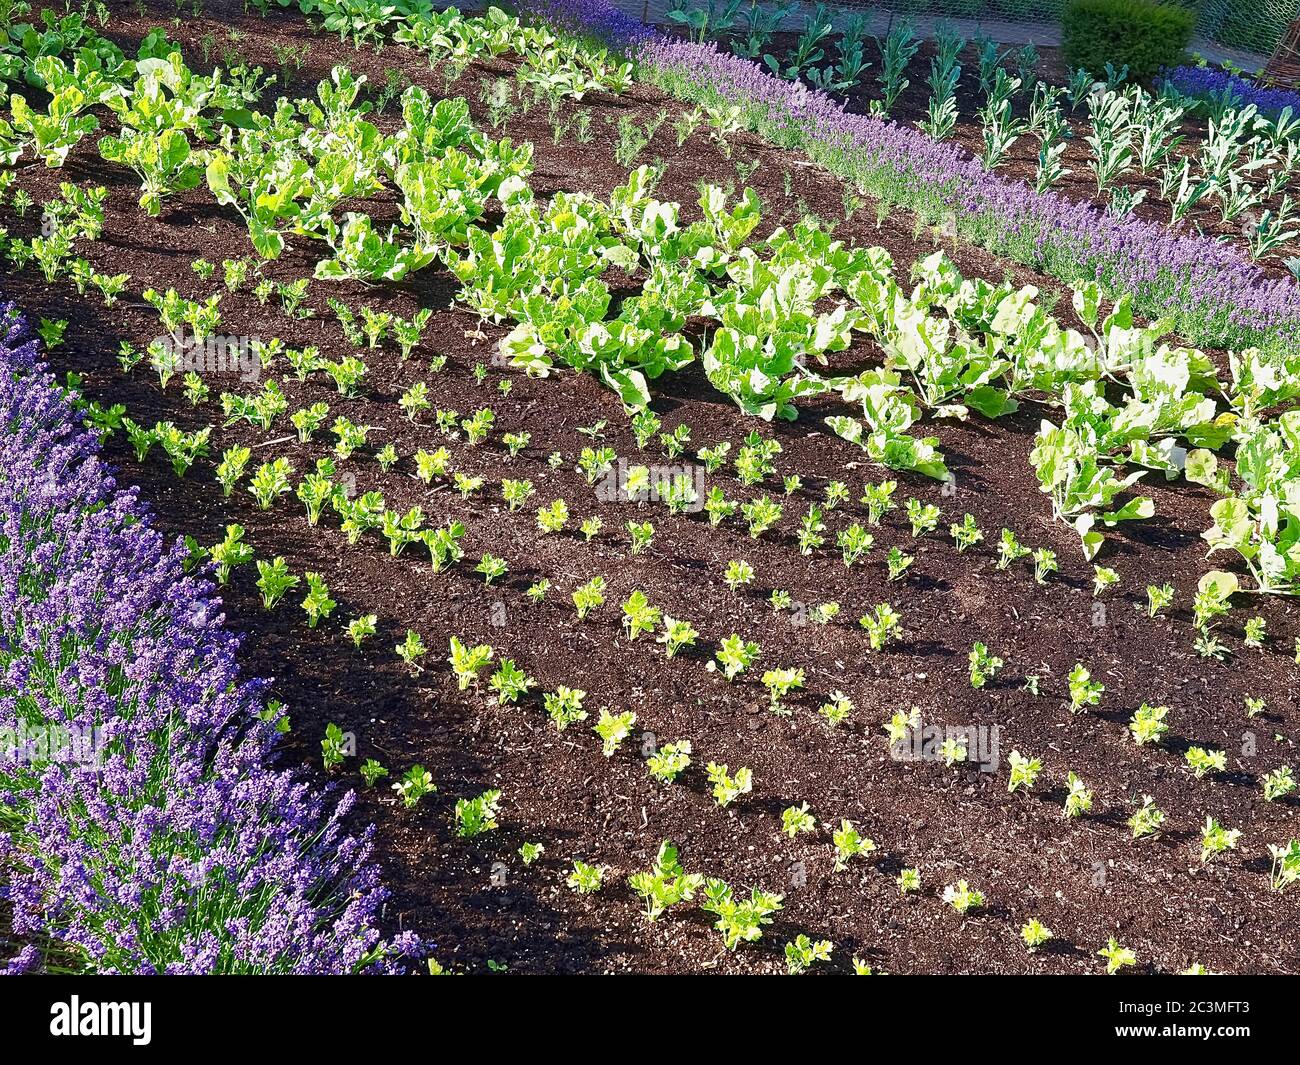 Vegetable garden with kohlrabi plants and lavender flowers Stock Photo